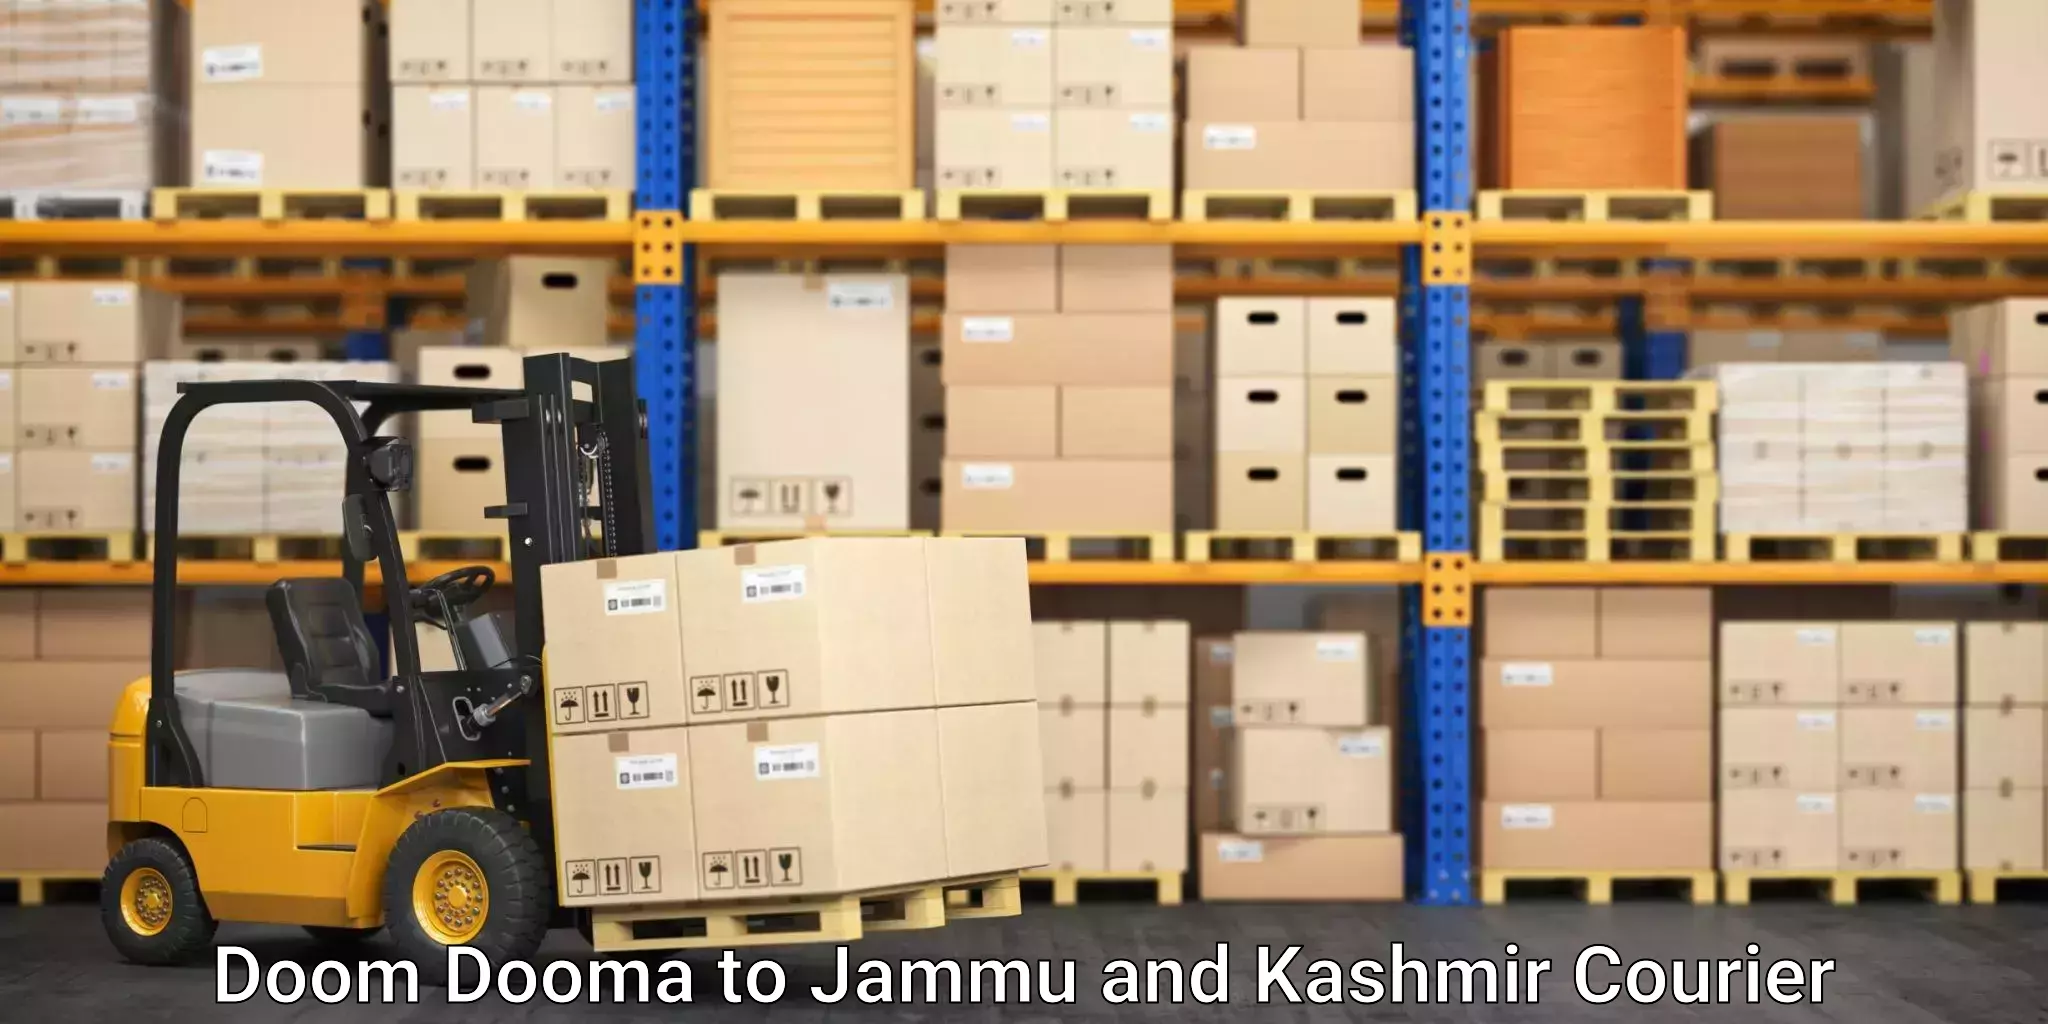 Courier service comparison Doom Dooma to Jammu